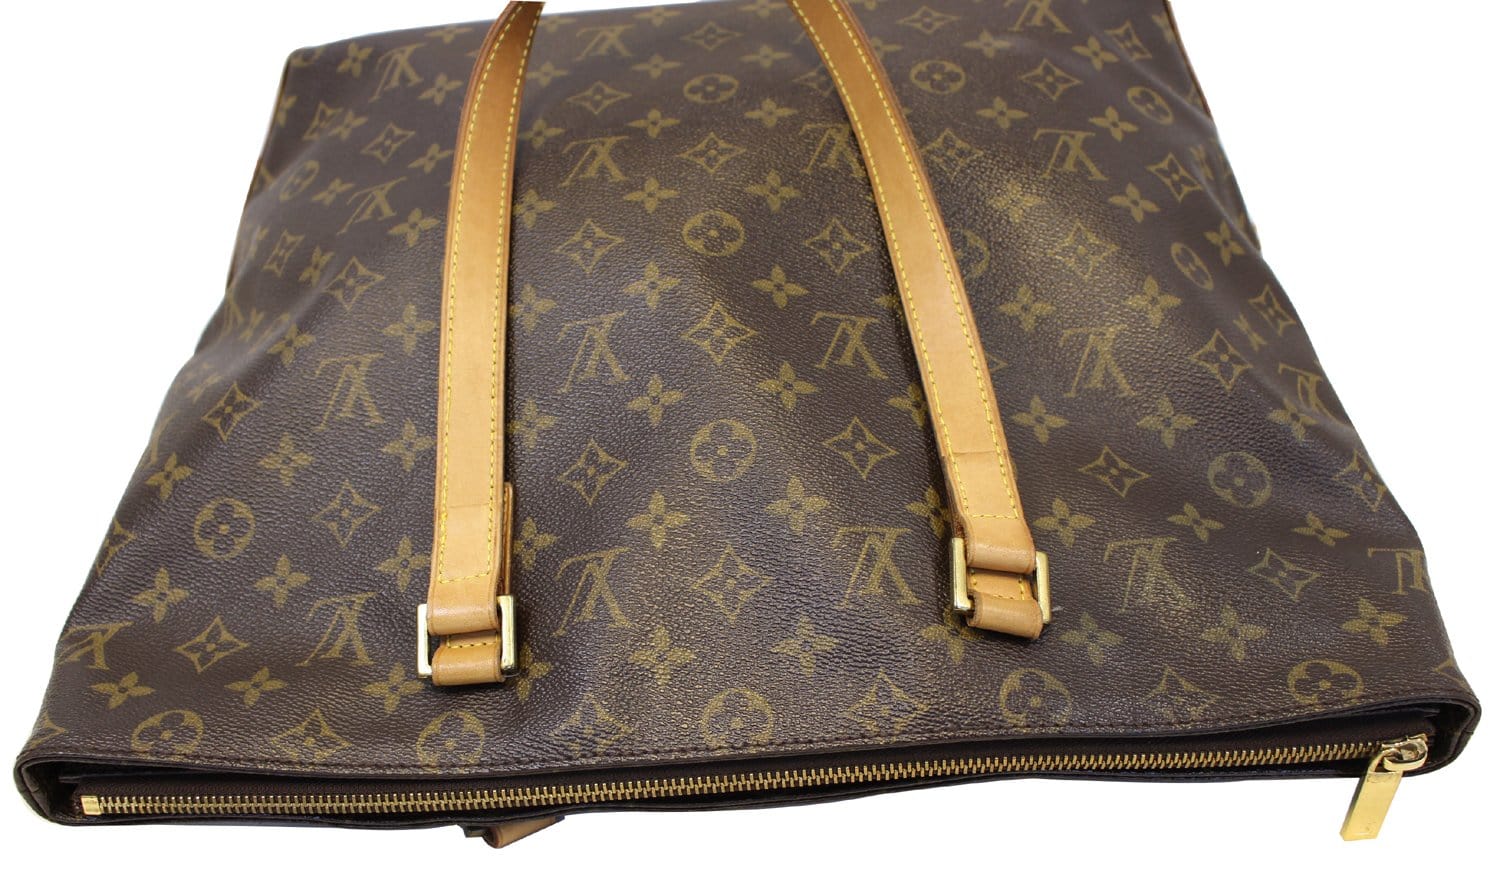 Louis Vuitton Caba Mezzo Tote Bag